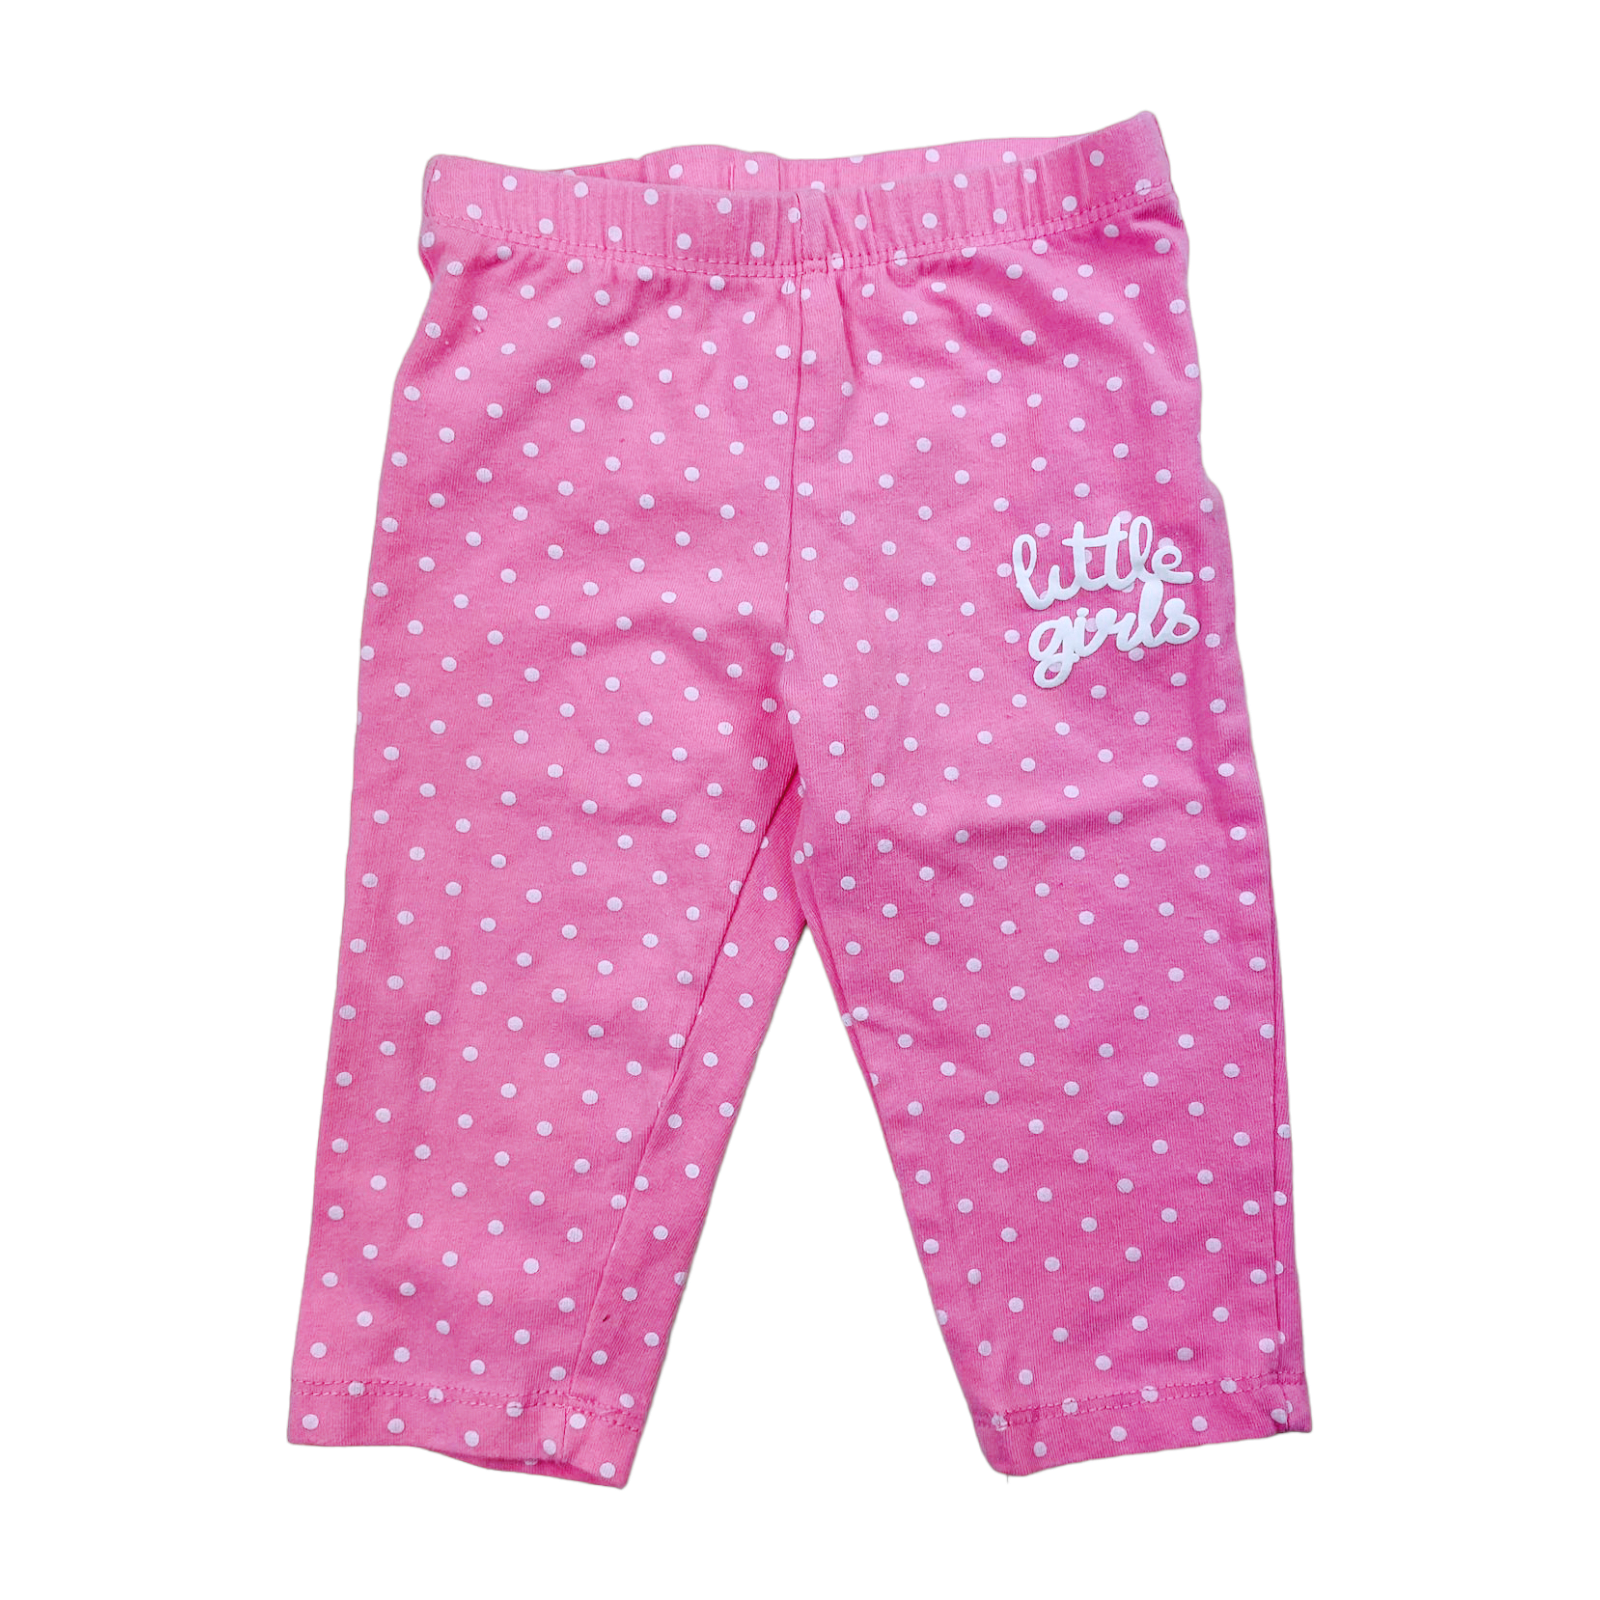 Calza rosada con puntitos blancos "Little girls"